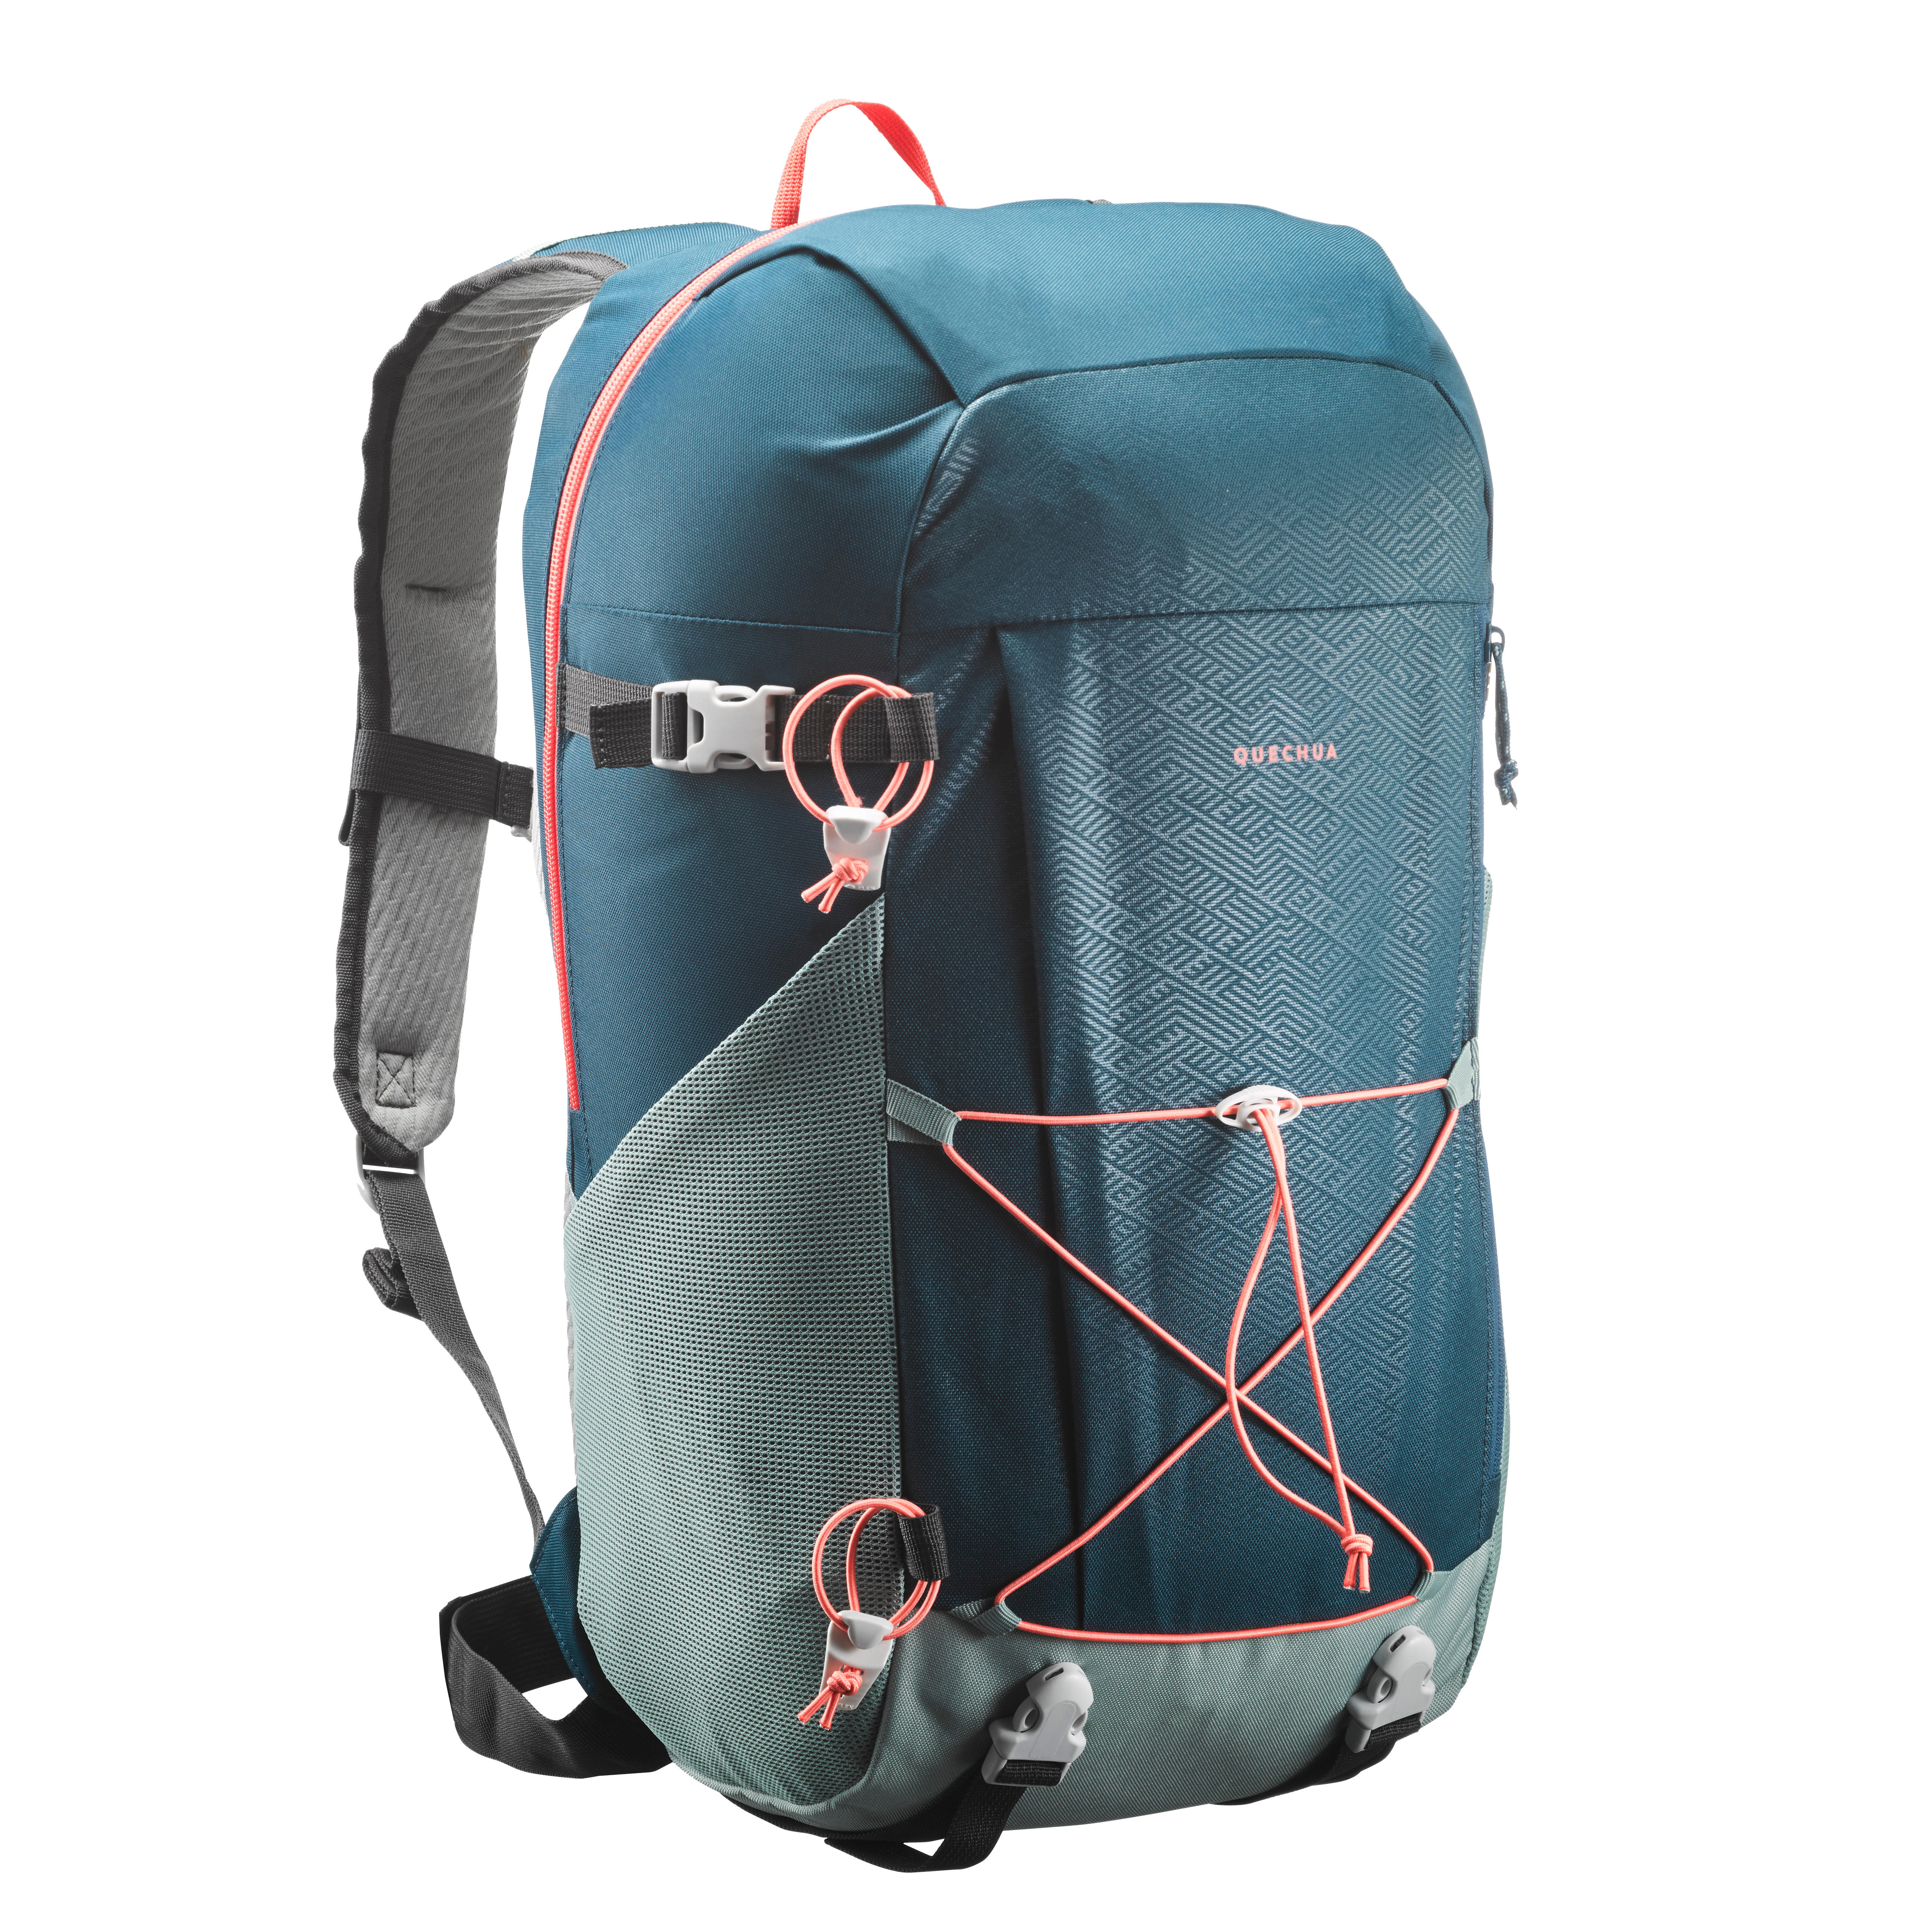 Buy Compact Travel Backpack Ball Bag 15L Blue Online | Decathlon